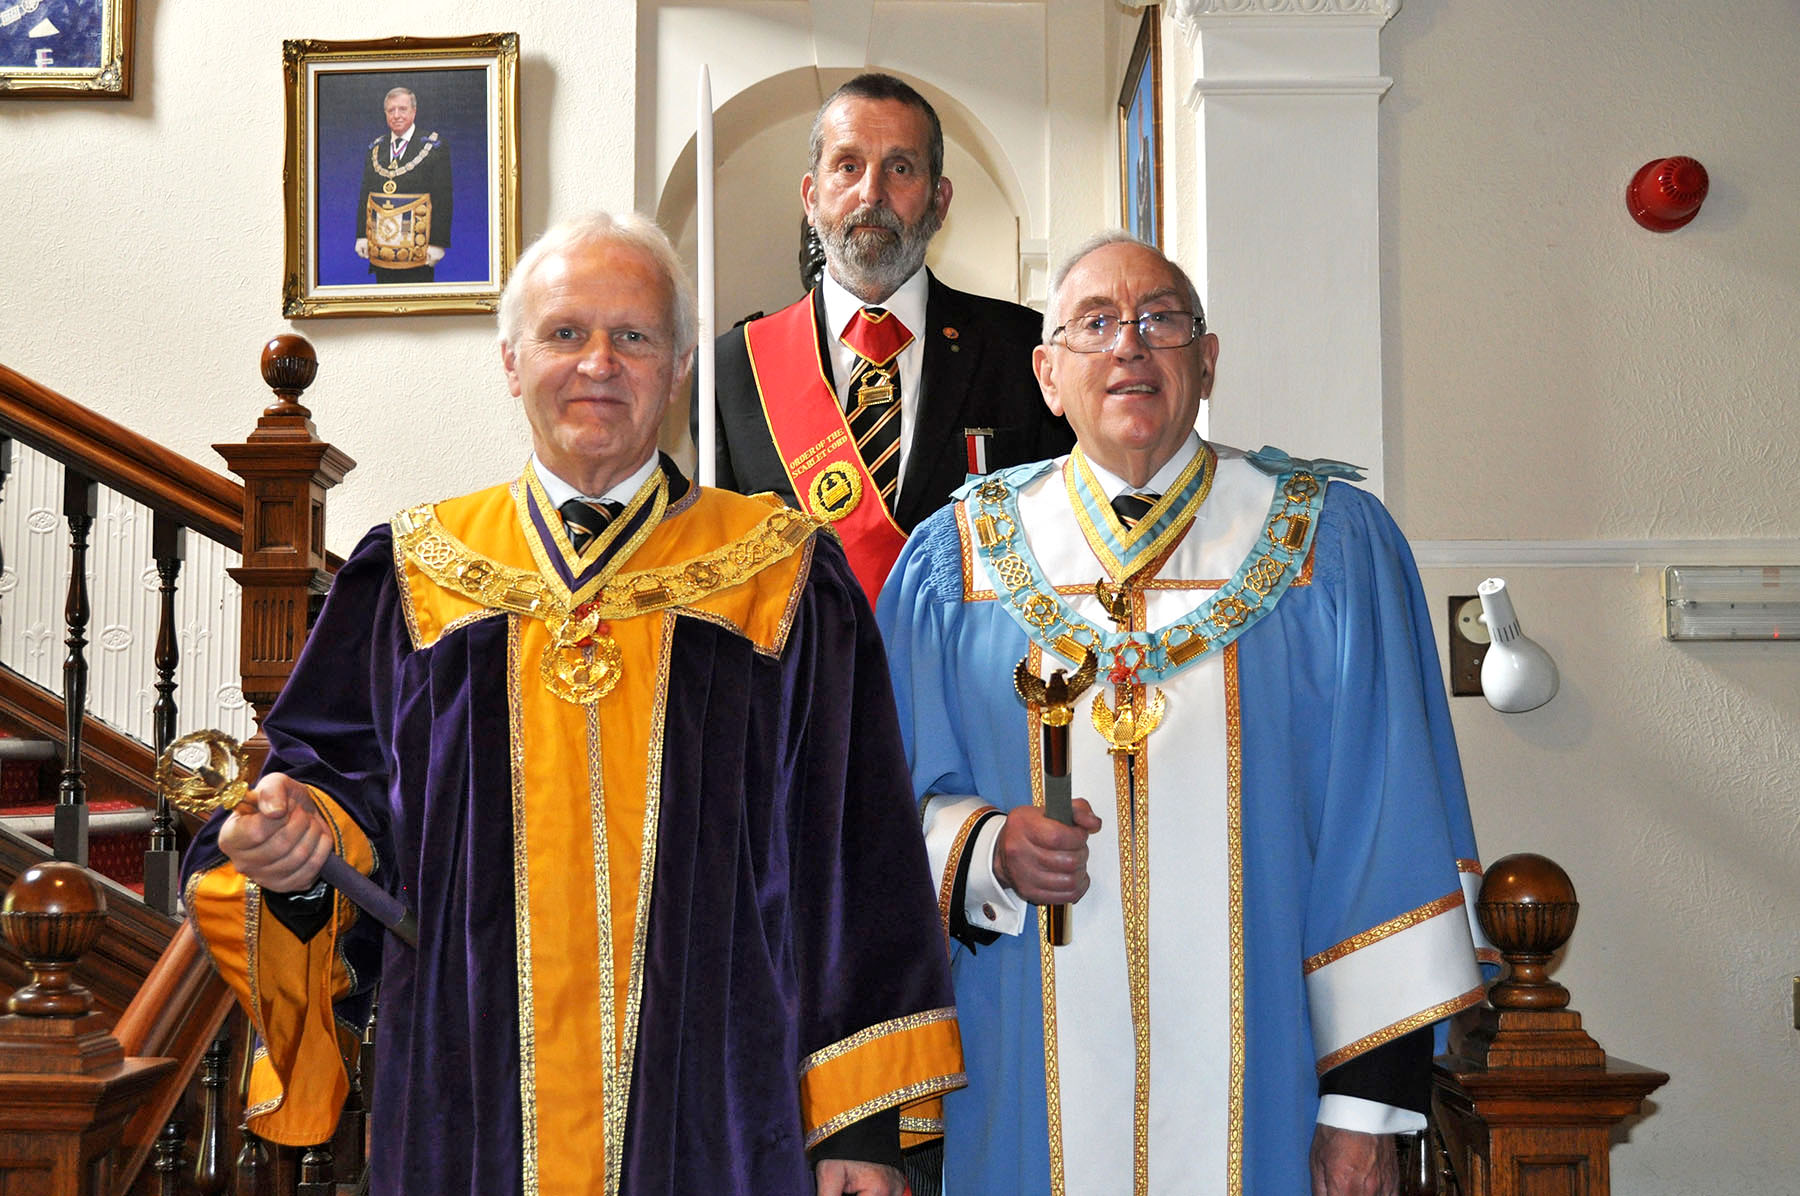 The Annual Meeting of the Provincial Grand Senatus of Surrey